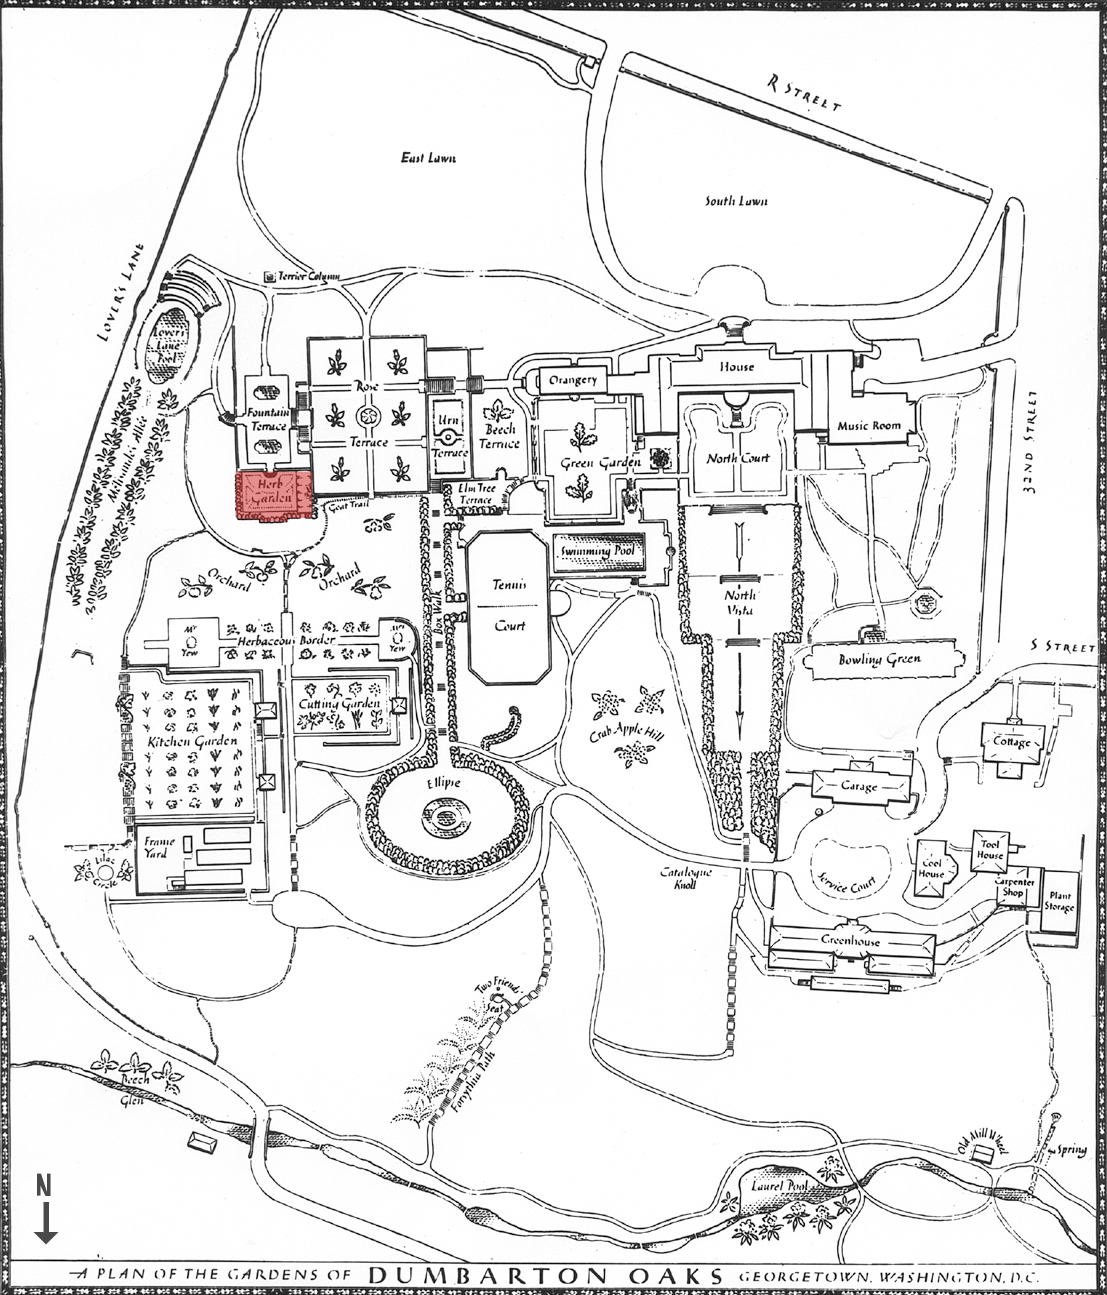 Plan of the Gardens of Dumbarton Oaks, Edited to highlight the Herb Garden